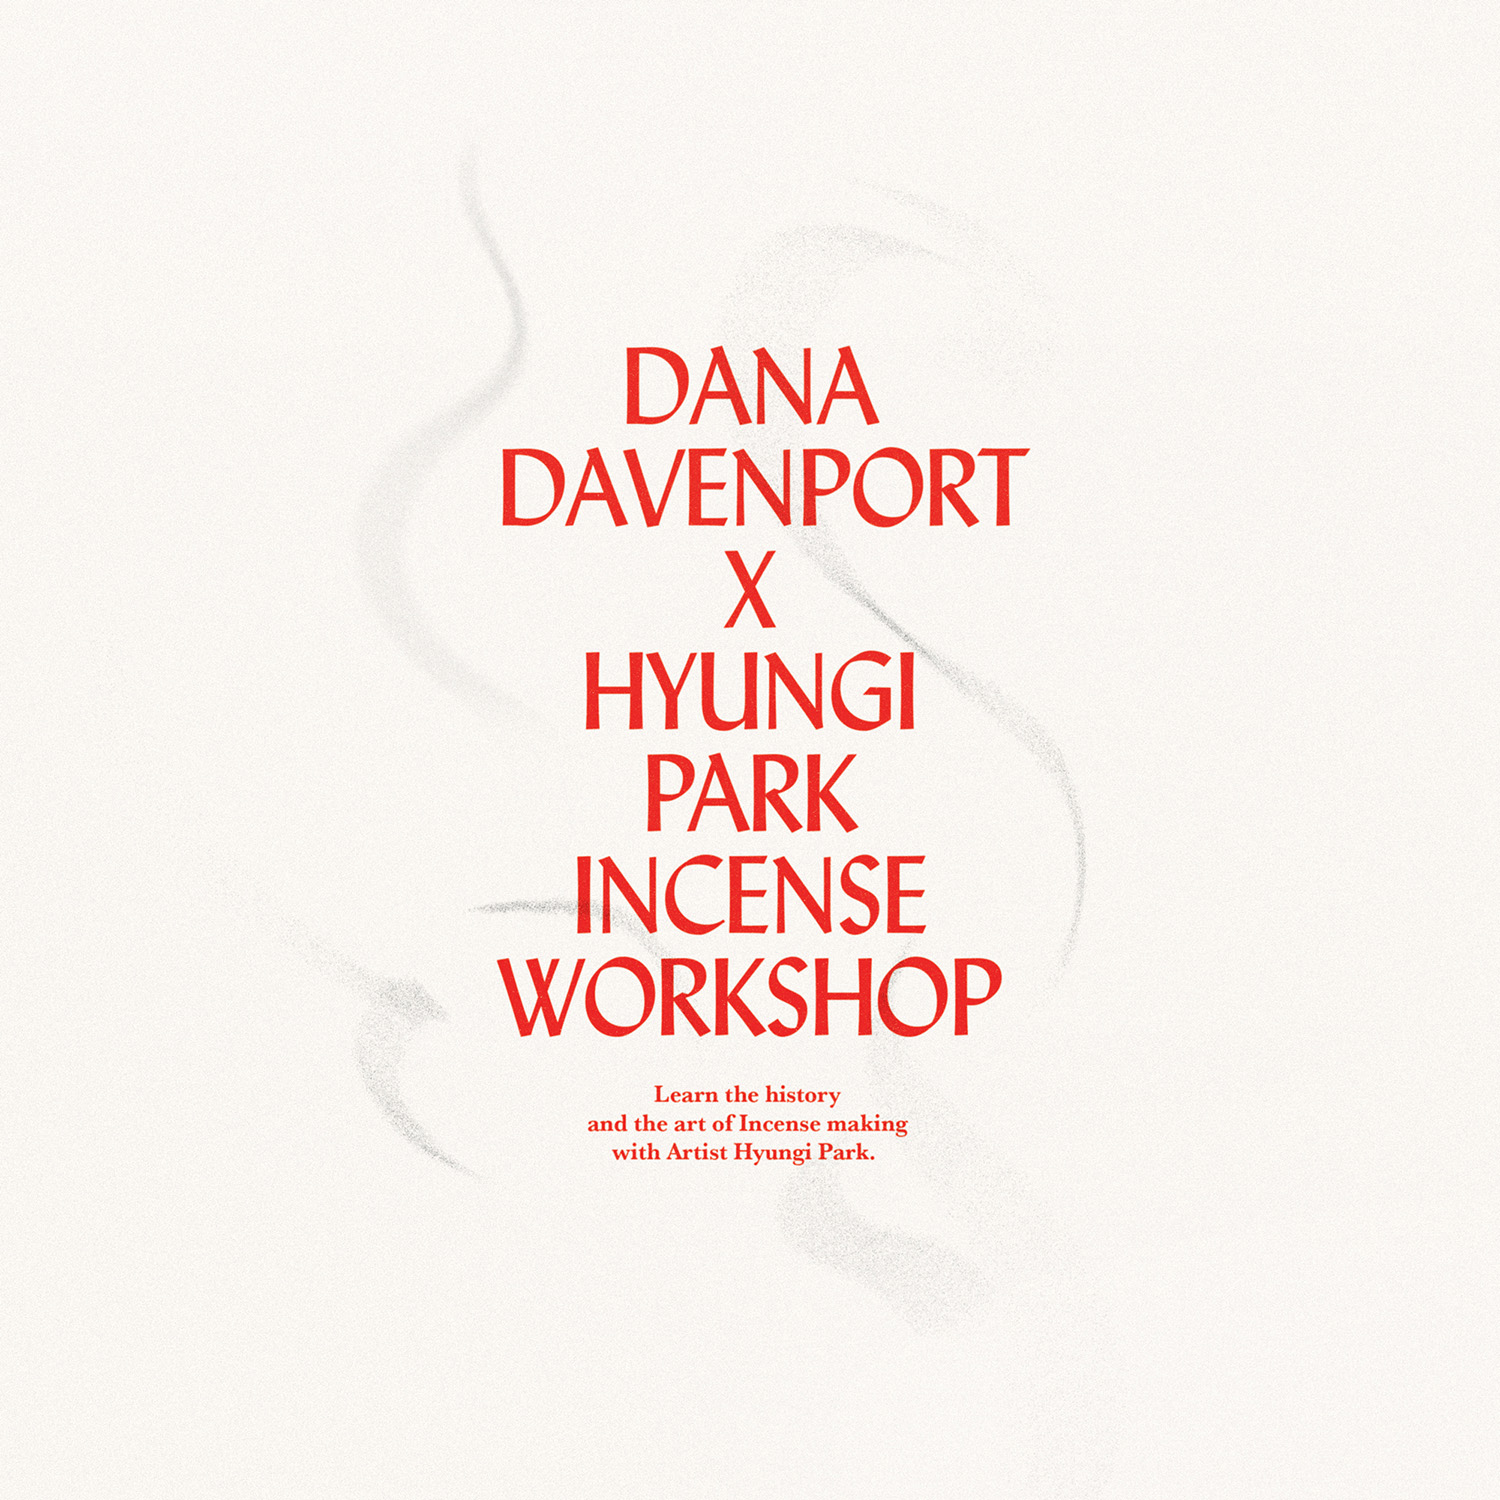 dana davenport x hyungi park incense workshopw in red letters